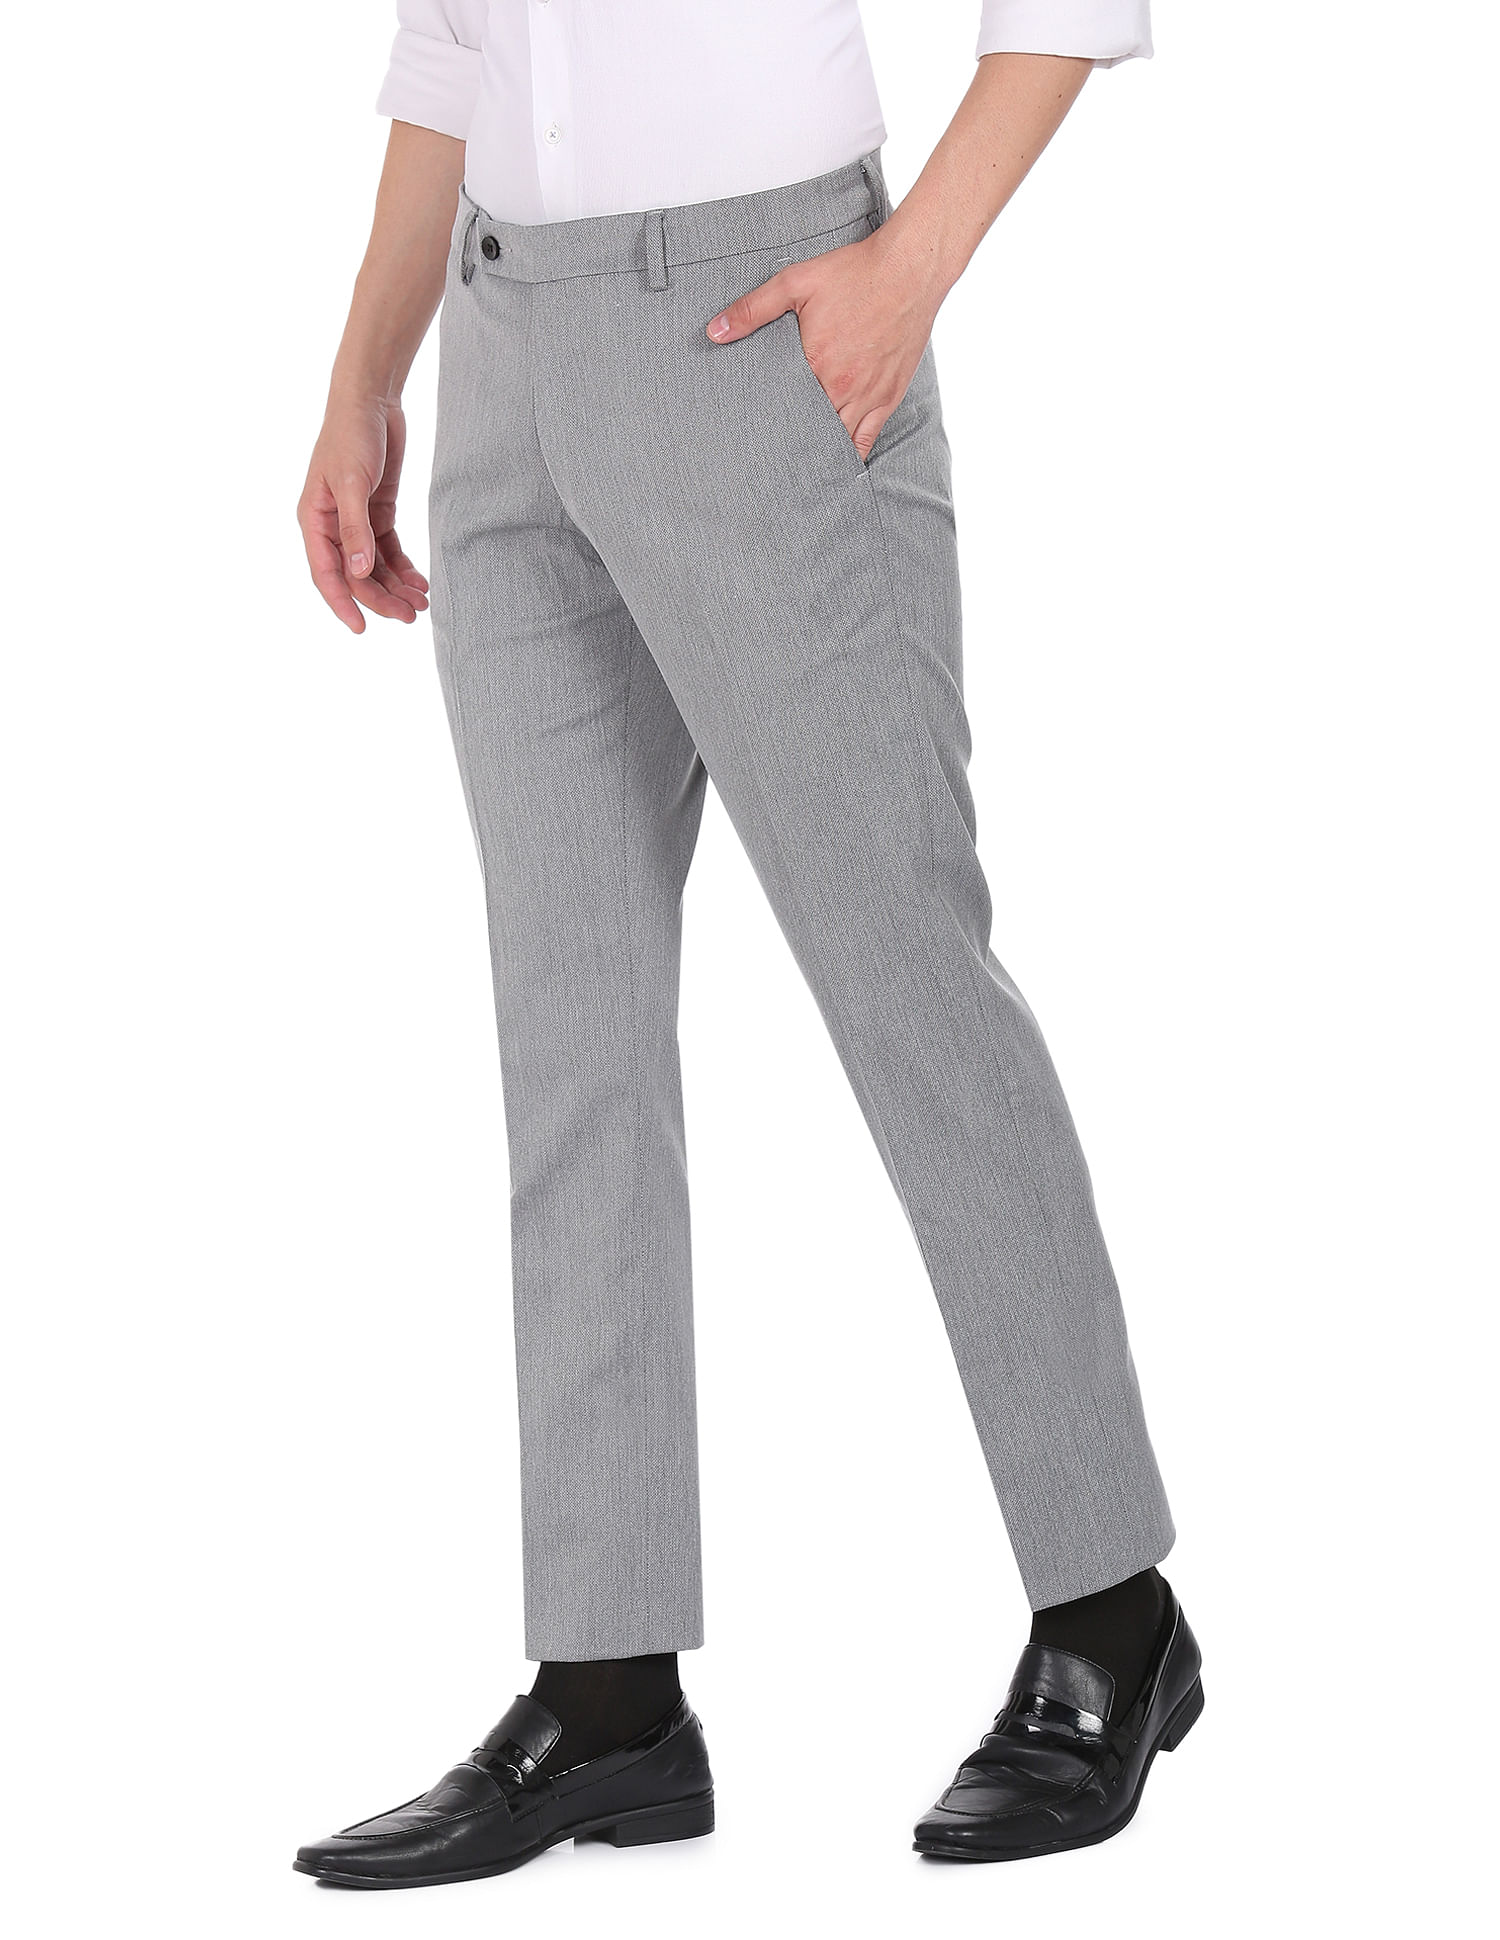 Slim Chino Pants Grey Color Nicerior - Best stretch skinny jeans, chinos |  Nicerior